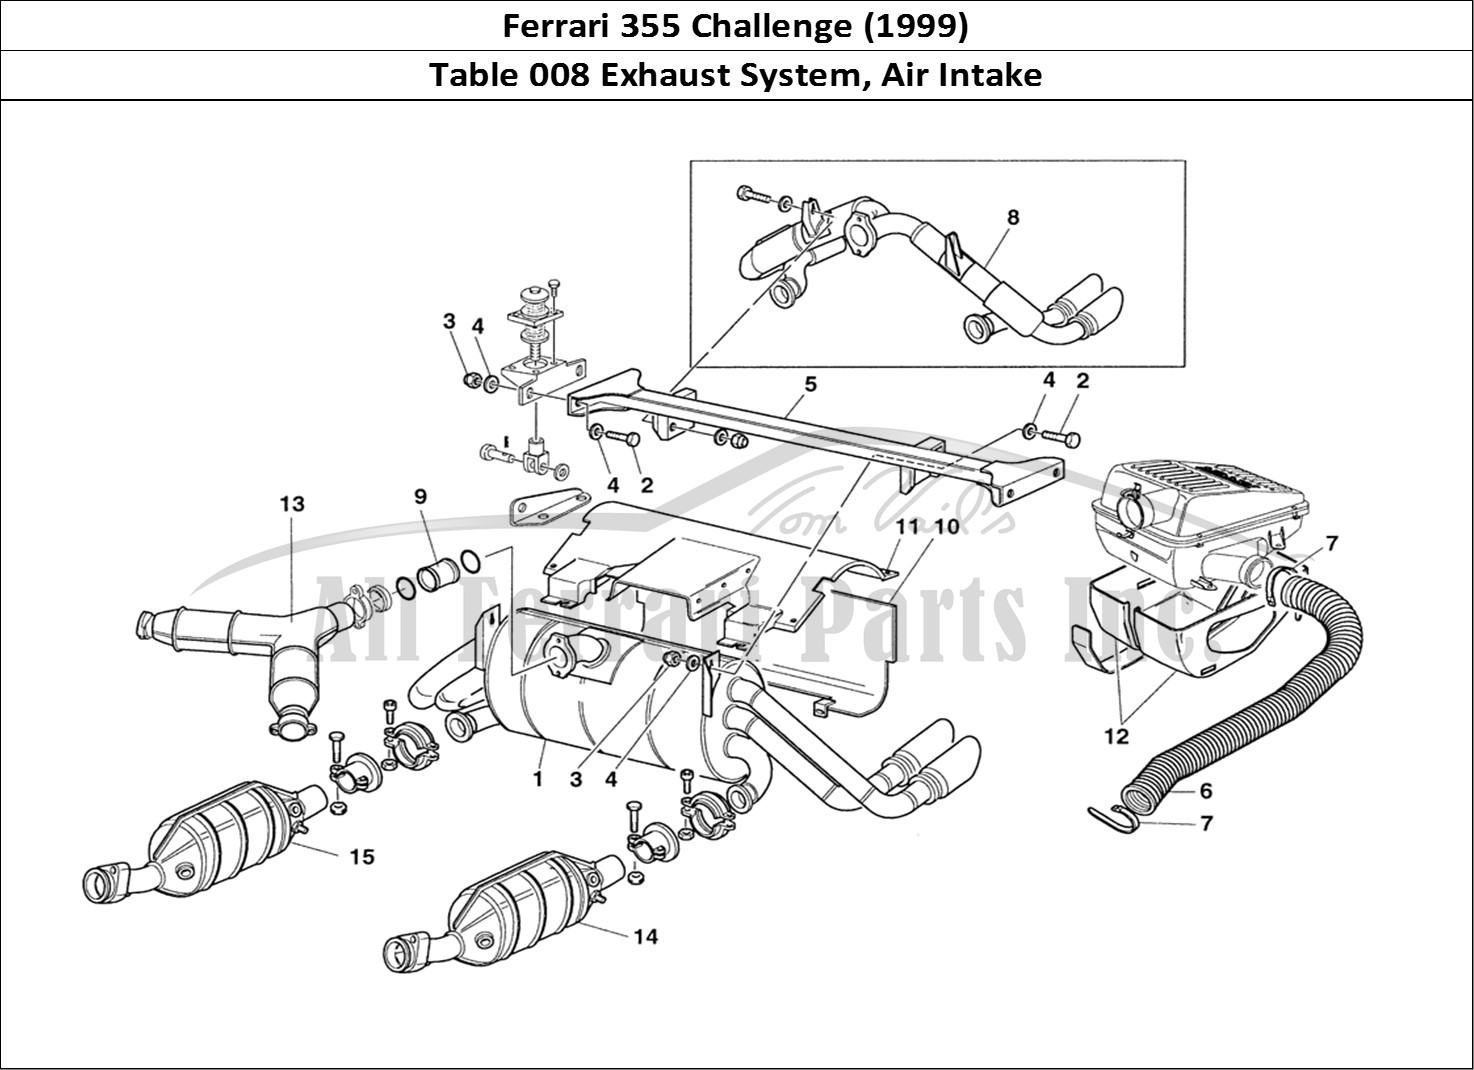 Ferrari Parts Ferrari 355 Challenge (1999) Page 008 Exhaust System - Air Inta